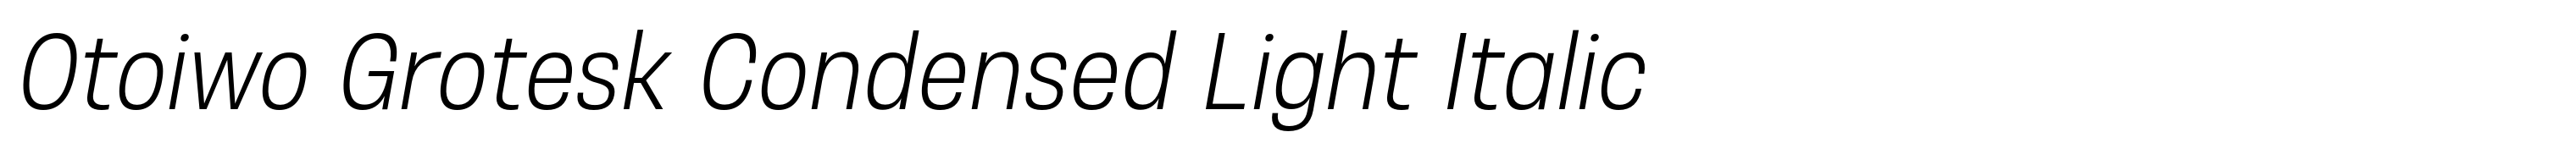 Otoiwo Grotesk Condensed Light Italic